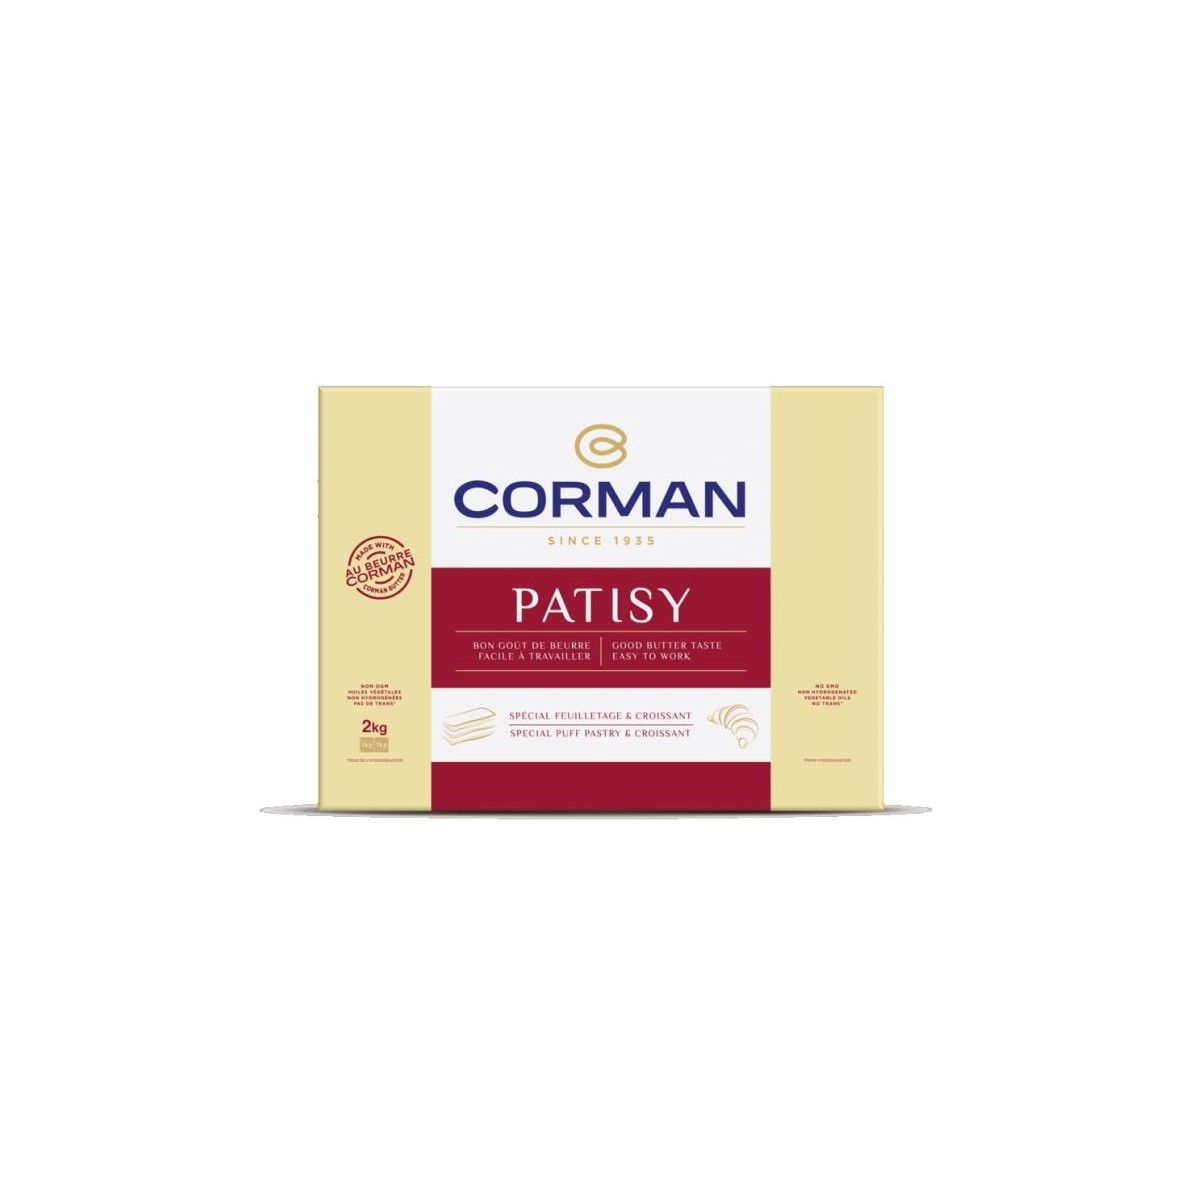 CORMAN PATISY PUFF PASTRY & CROISSANT 5 X 2 KG 0029754  KG